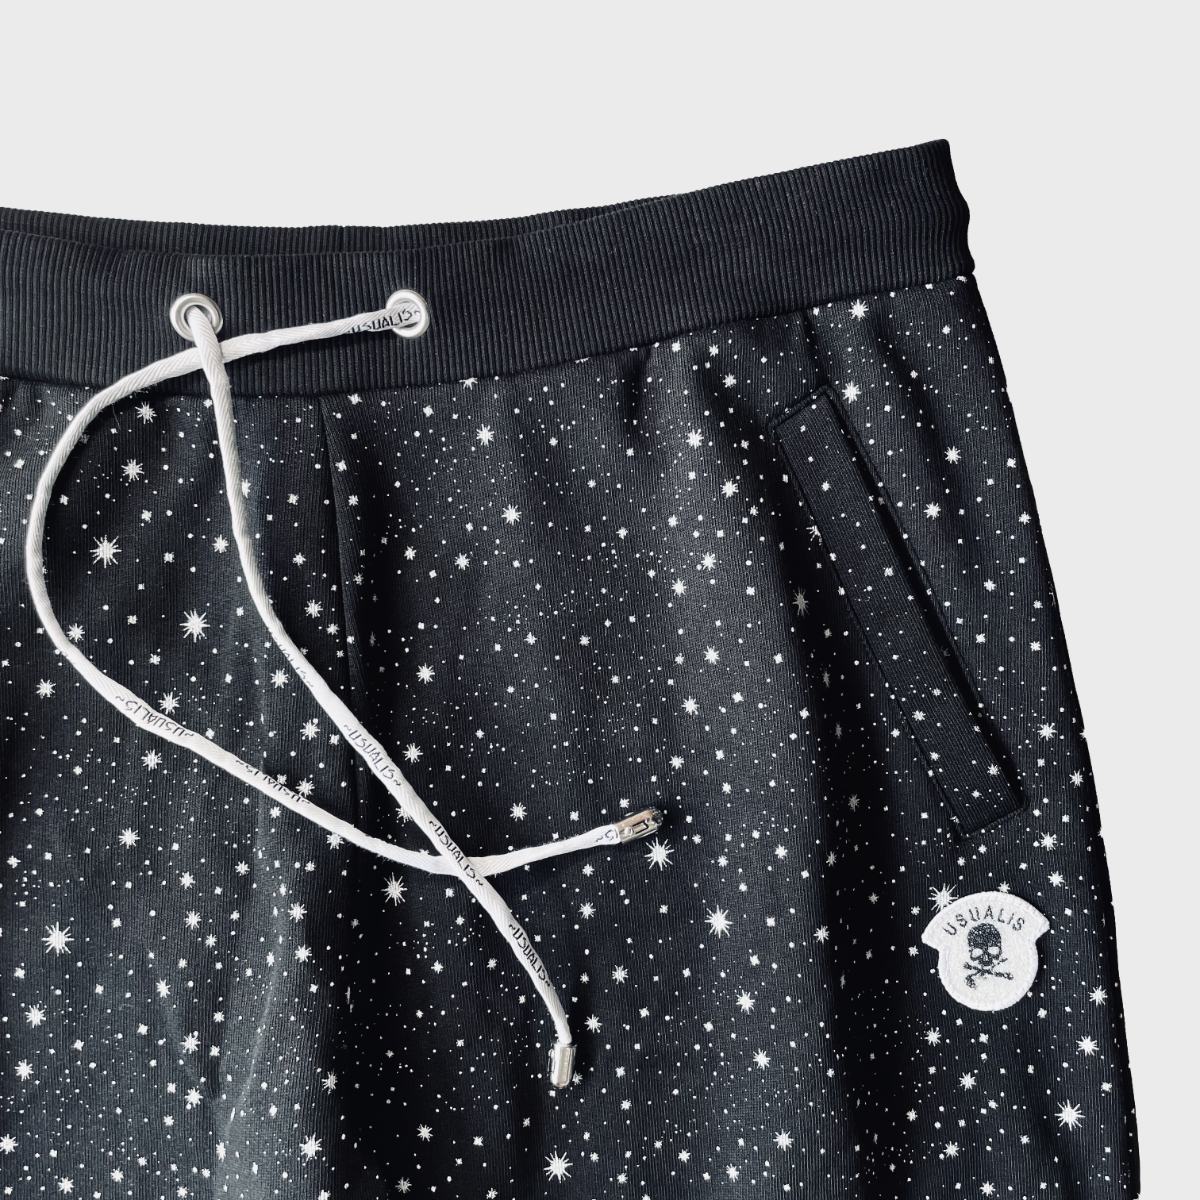 USUALIS Sweat Pants(Galaxy)画像4